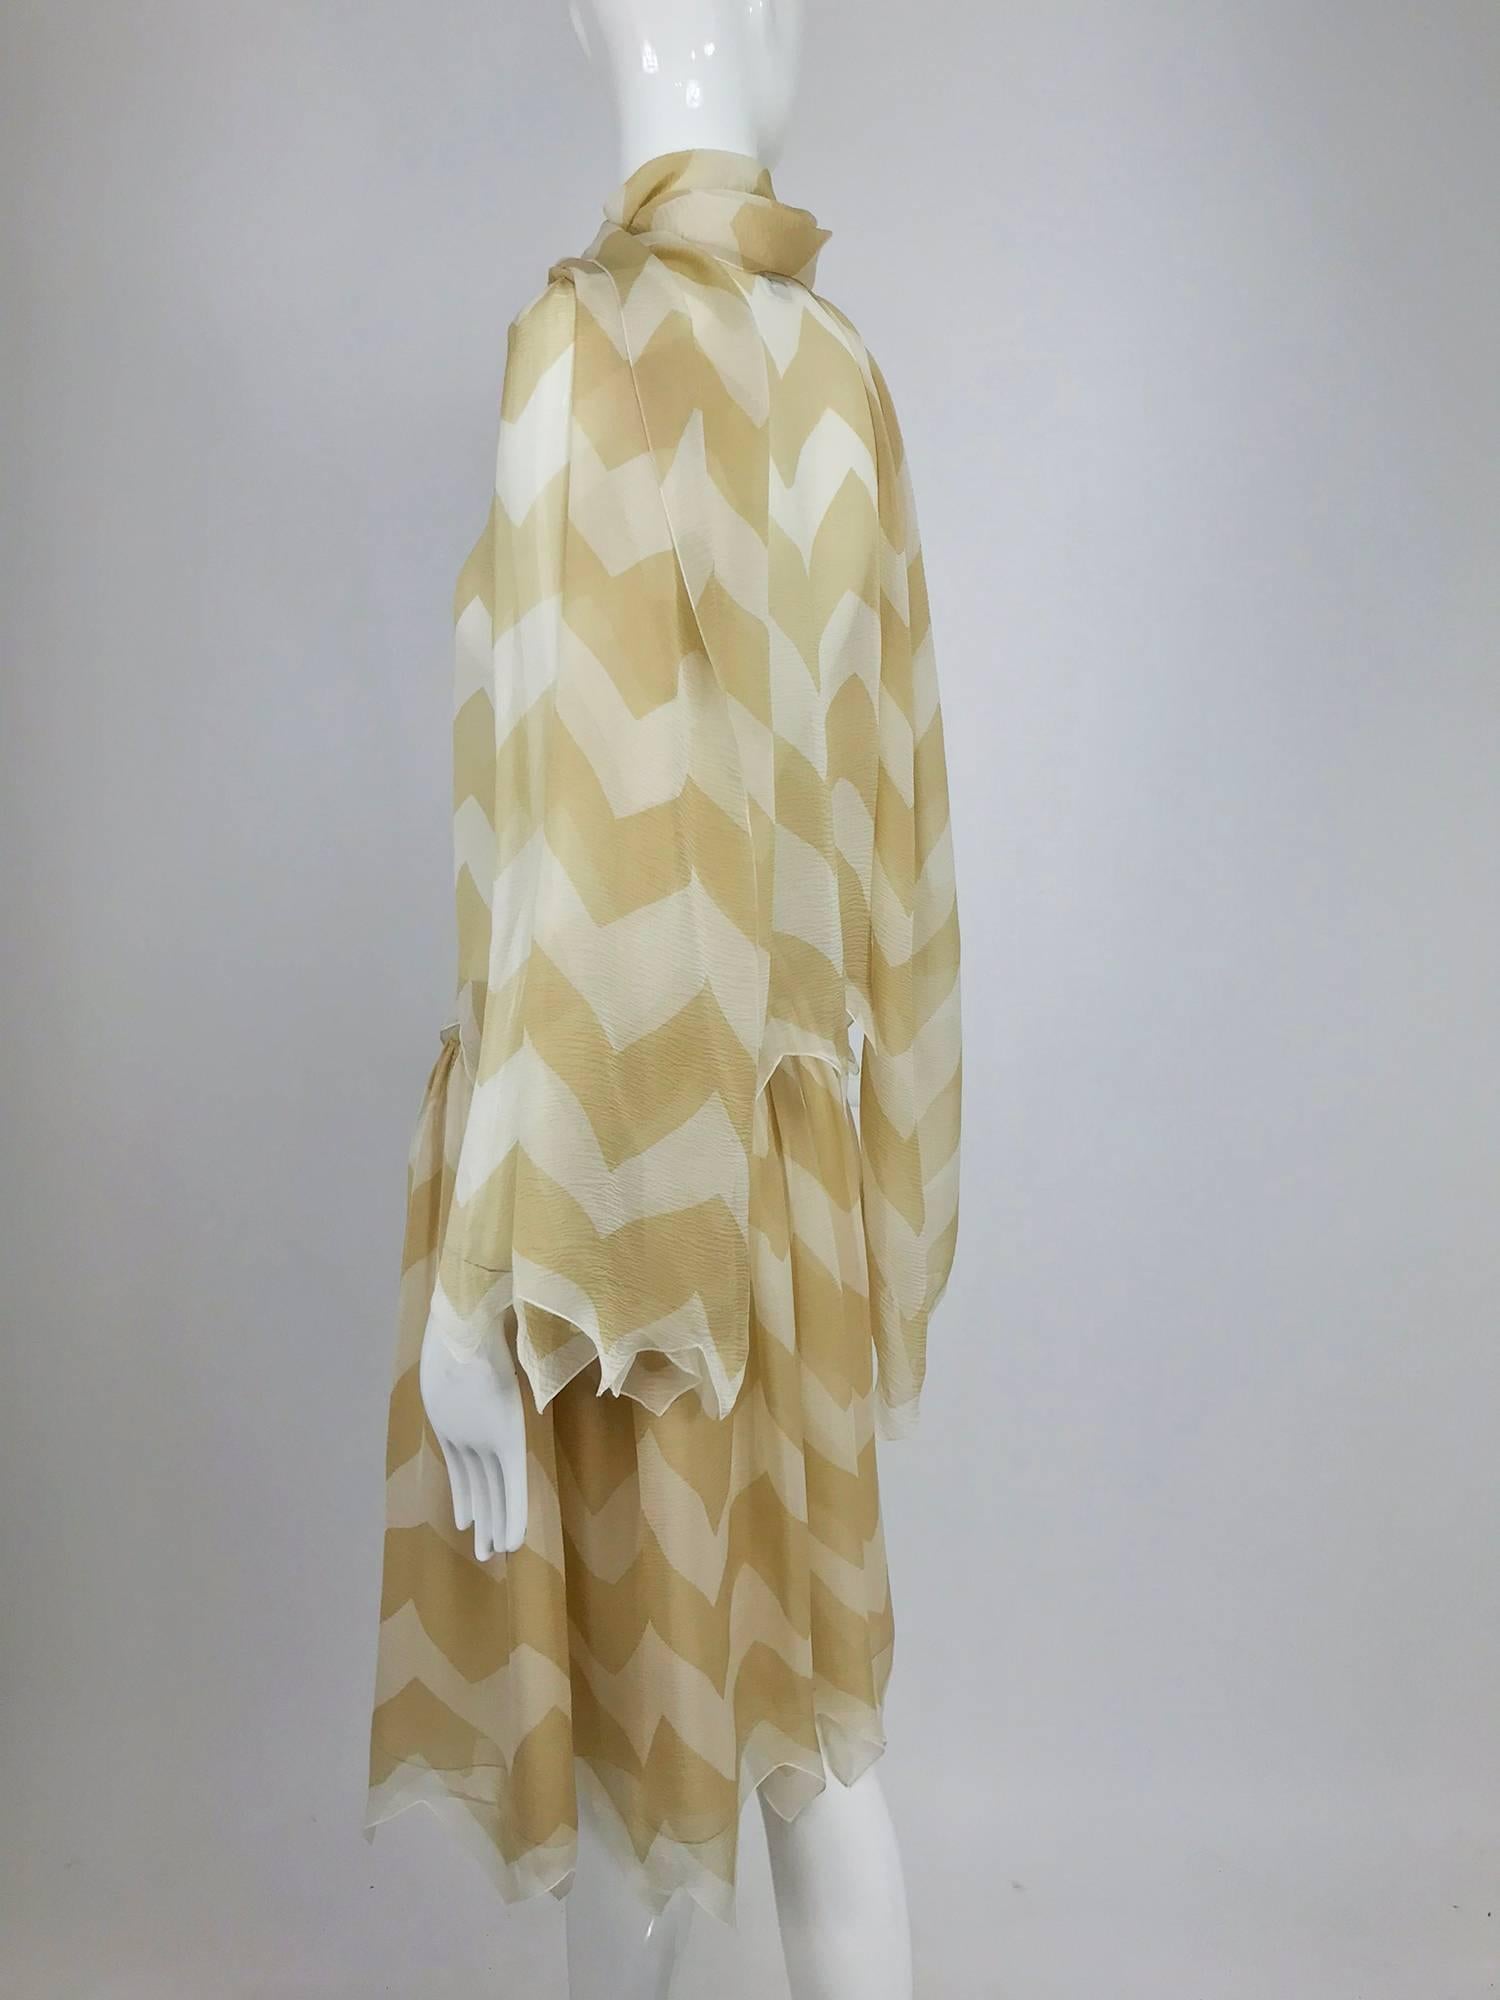 Chanel tan and cream zig zag silk chiffon blouse and skirt 2000A 3